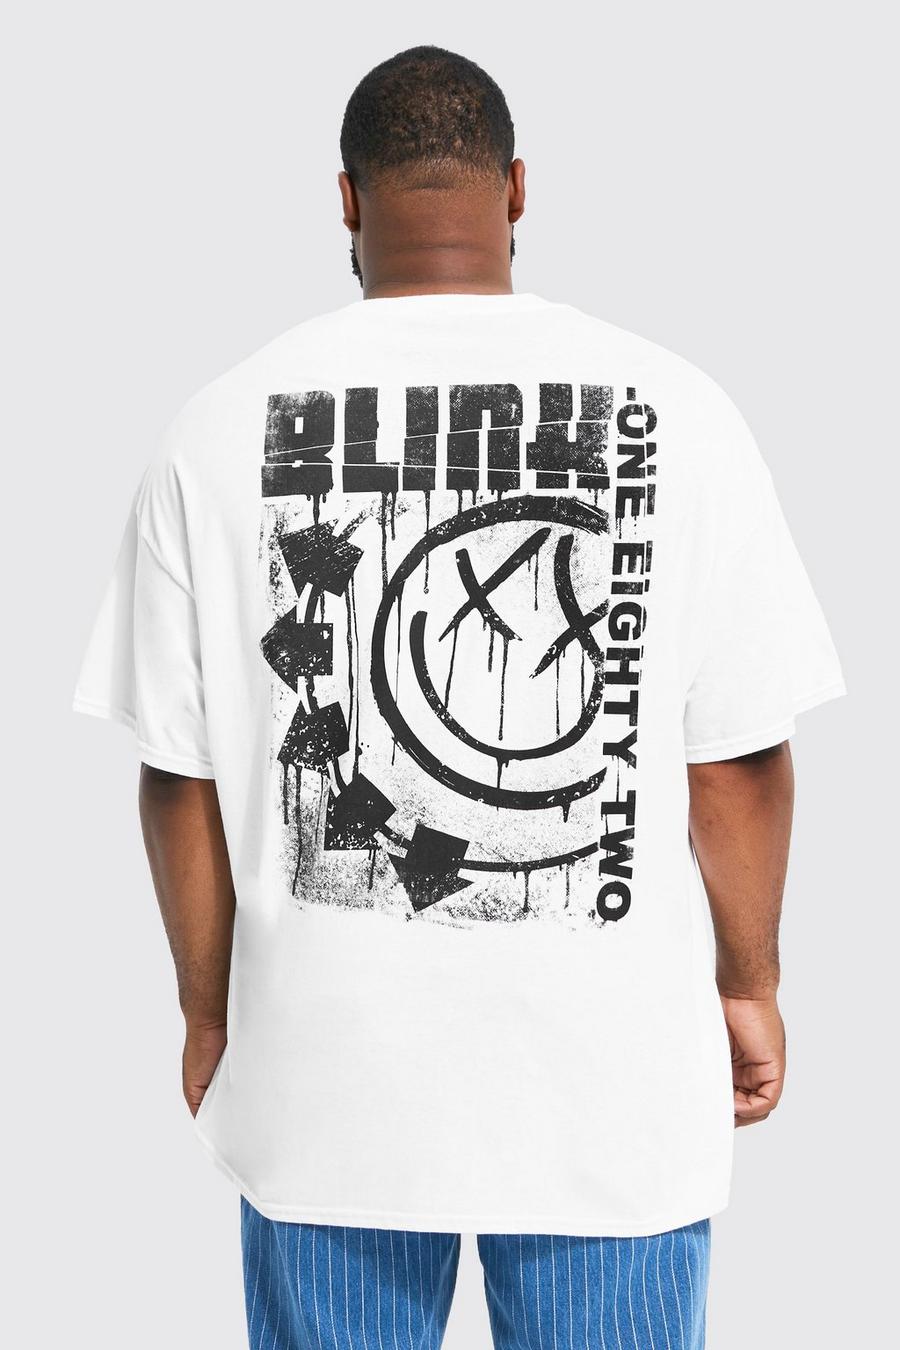 Grande taille - T-shirt à imprimé Blink 182, White image number 1